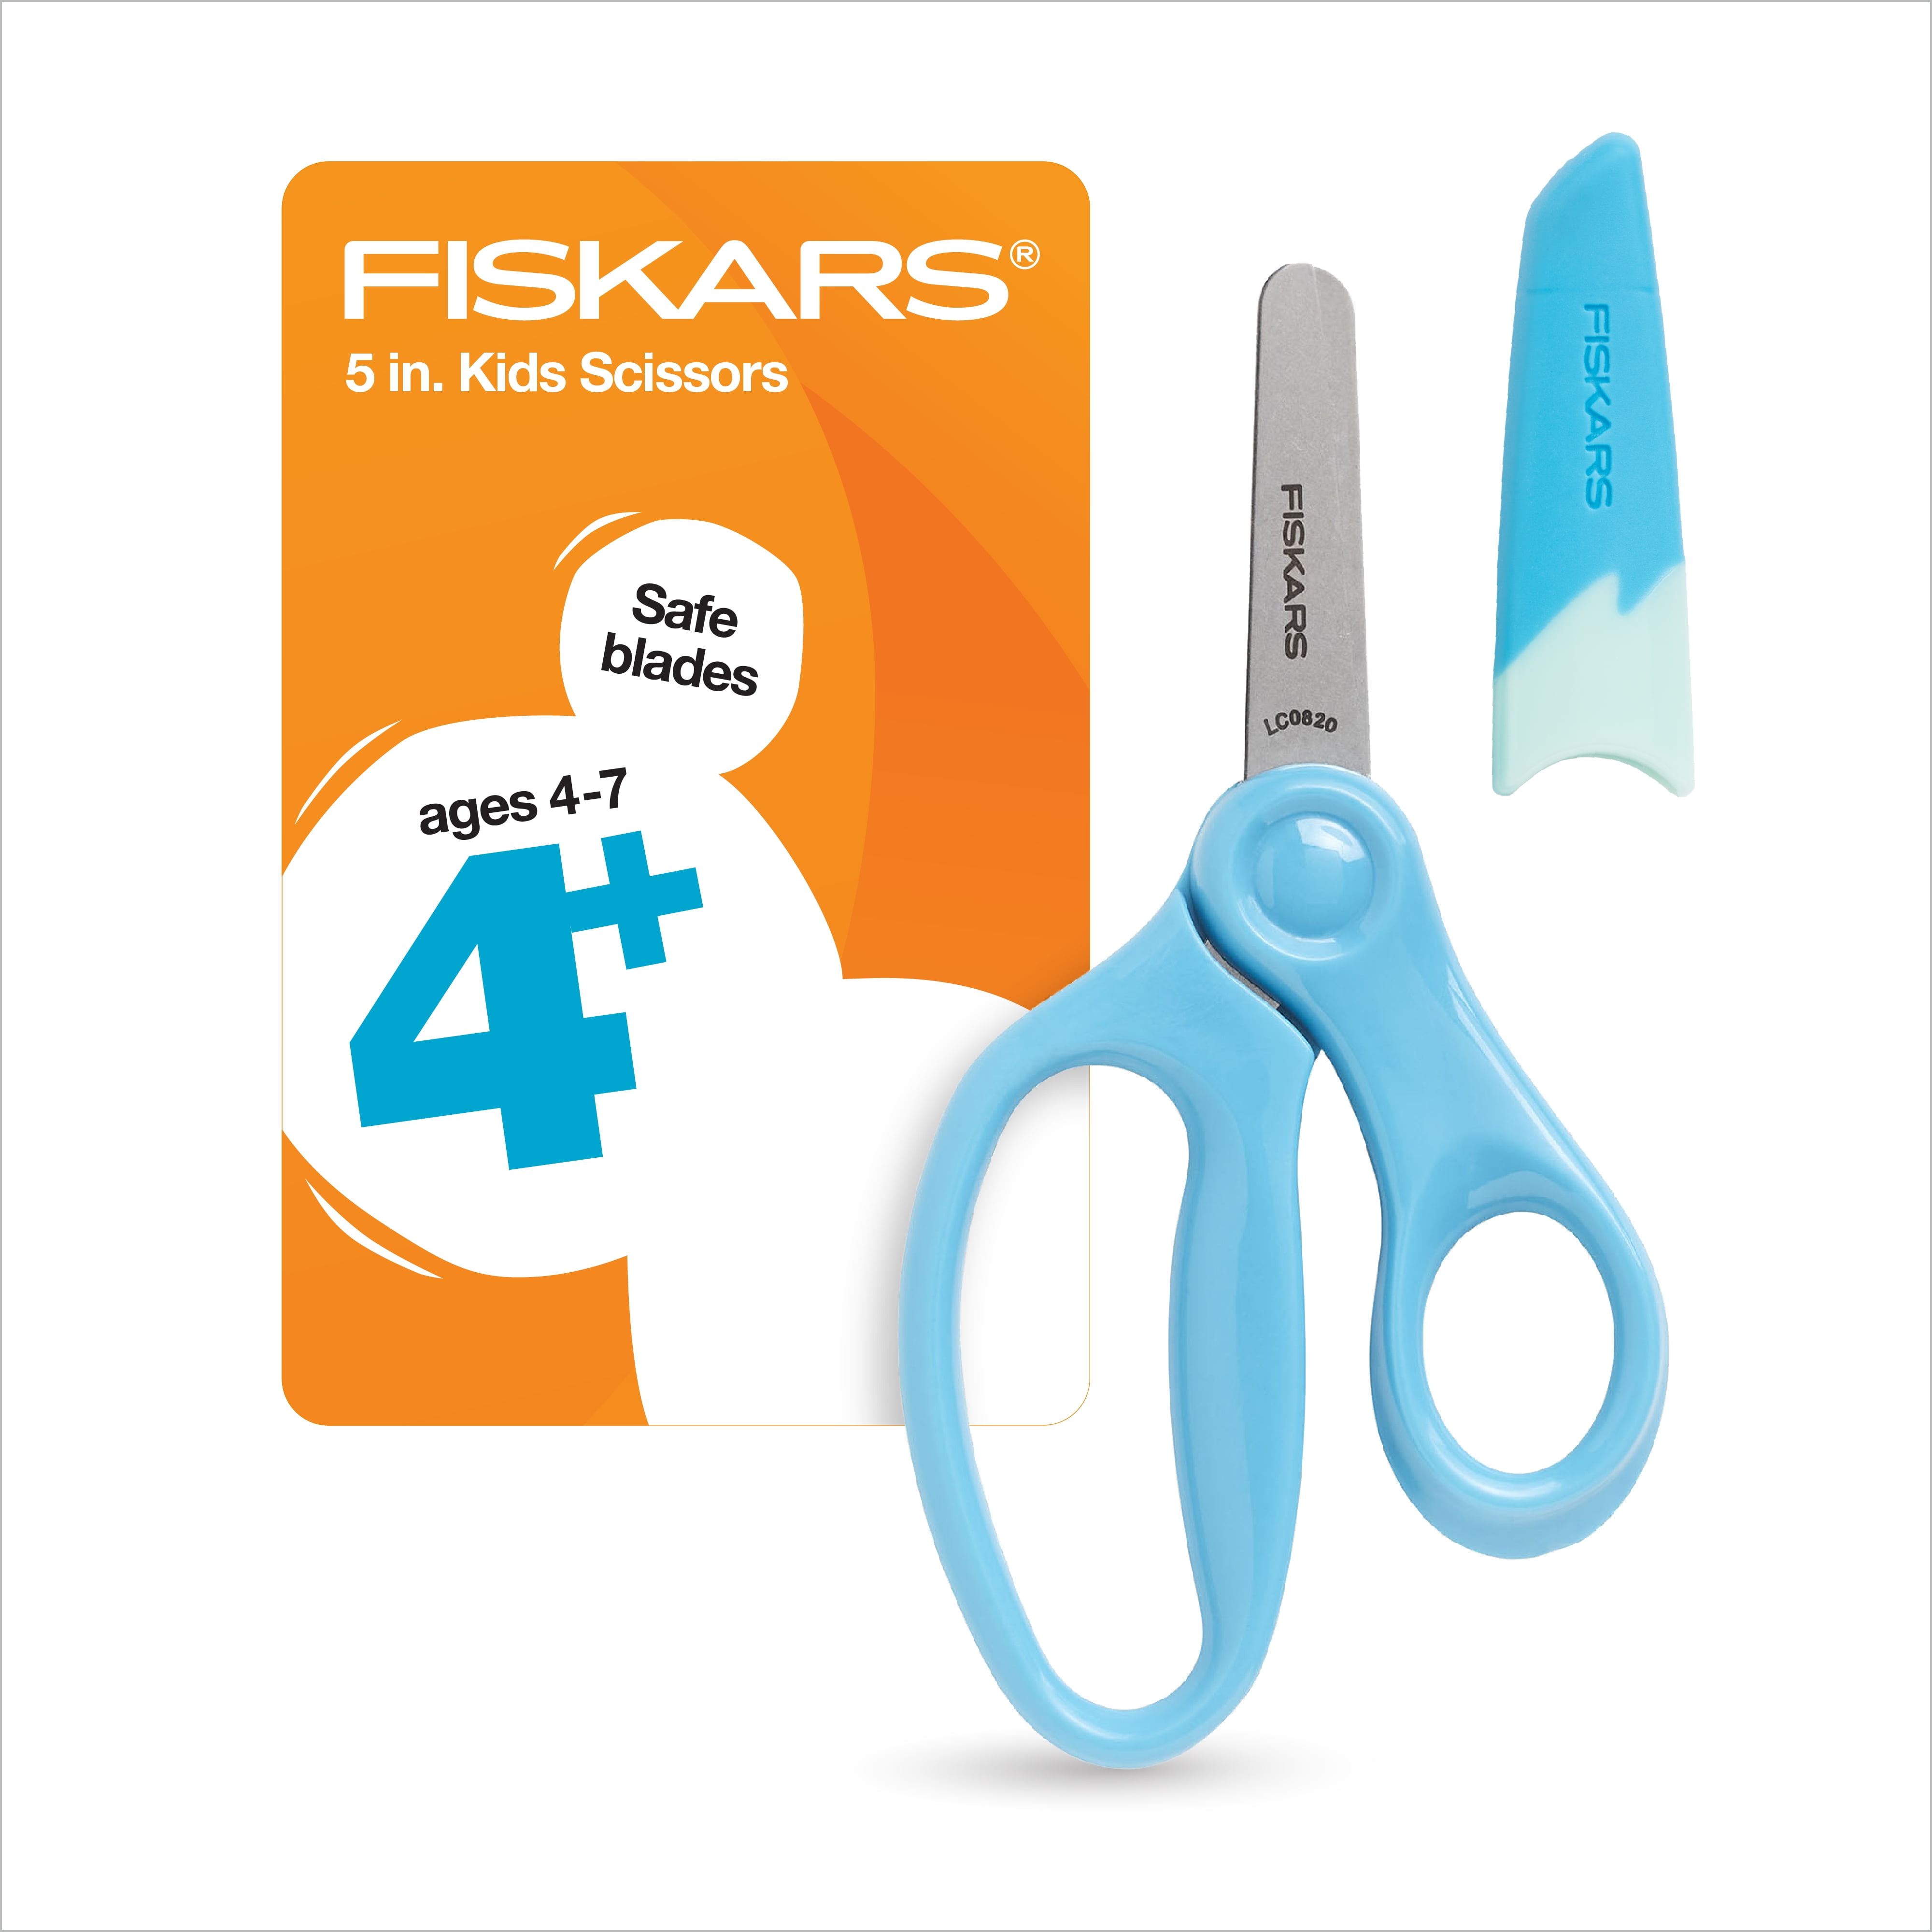 Fiskars® for Kids Blunt Tip Scissors for Kids